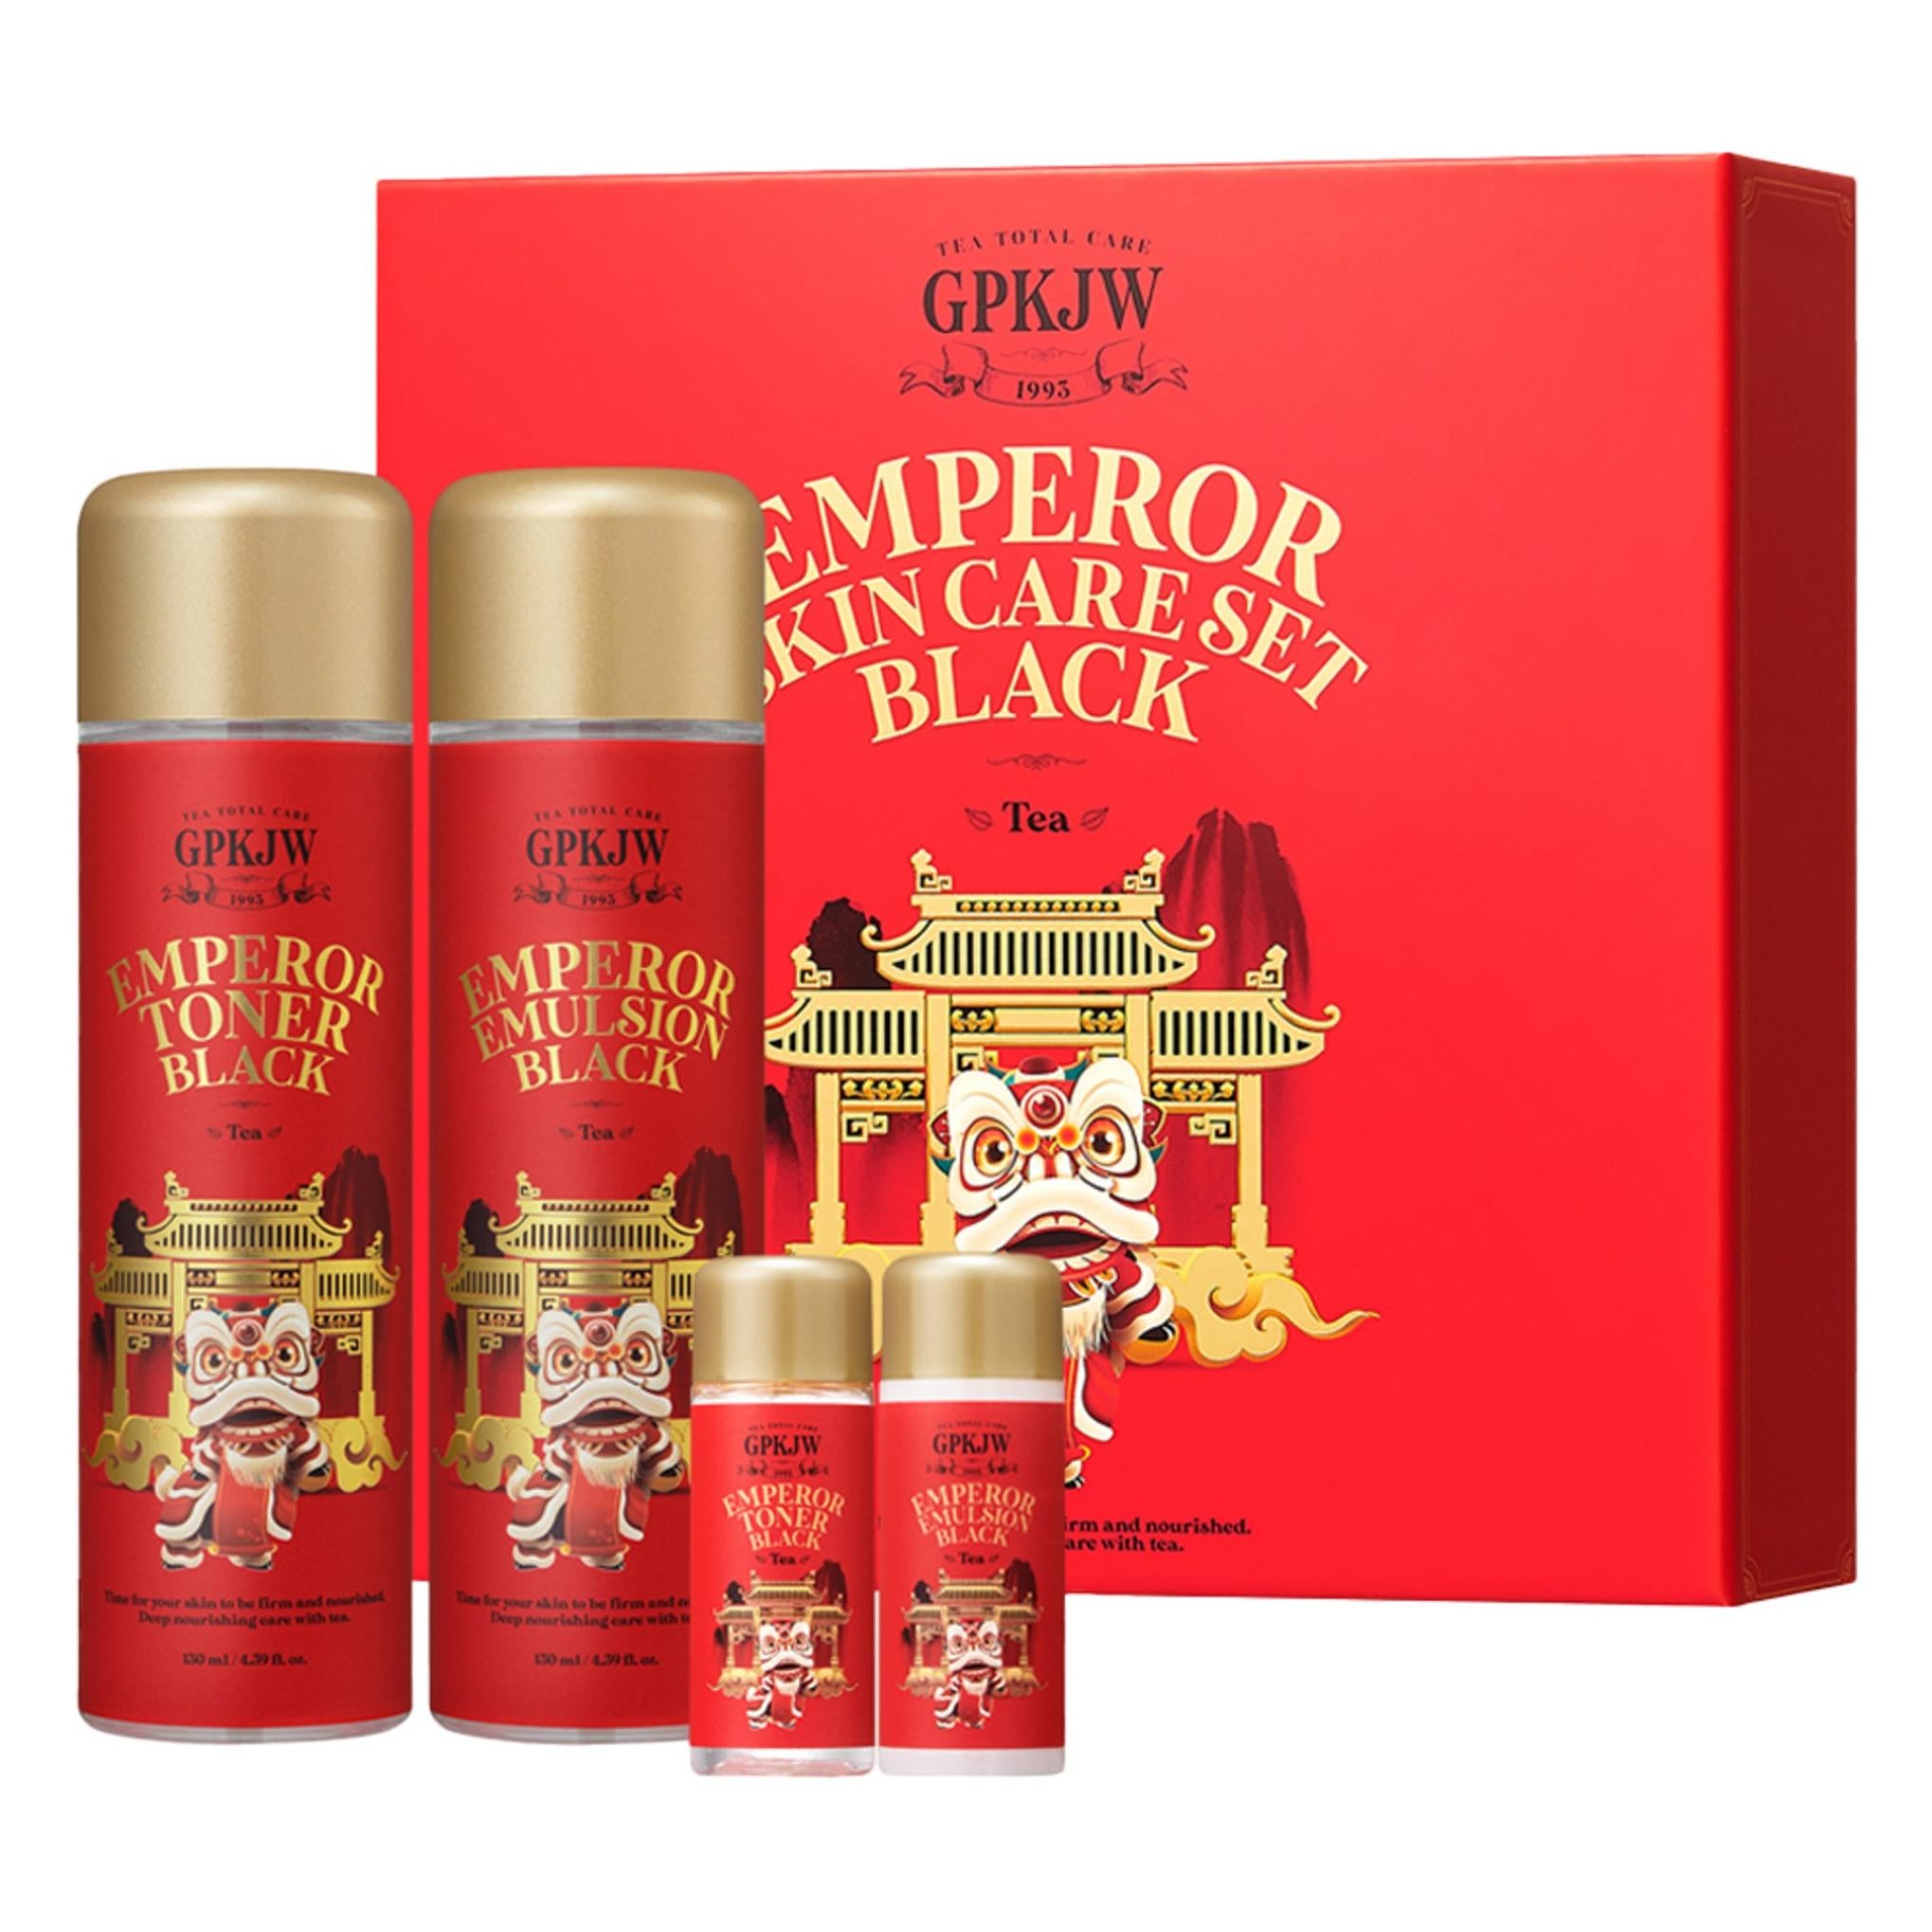 GP KJ W Emperor Skin Care Set Black